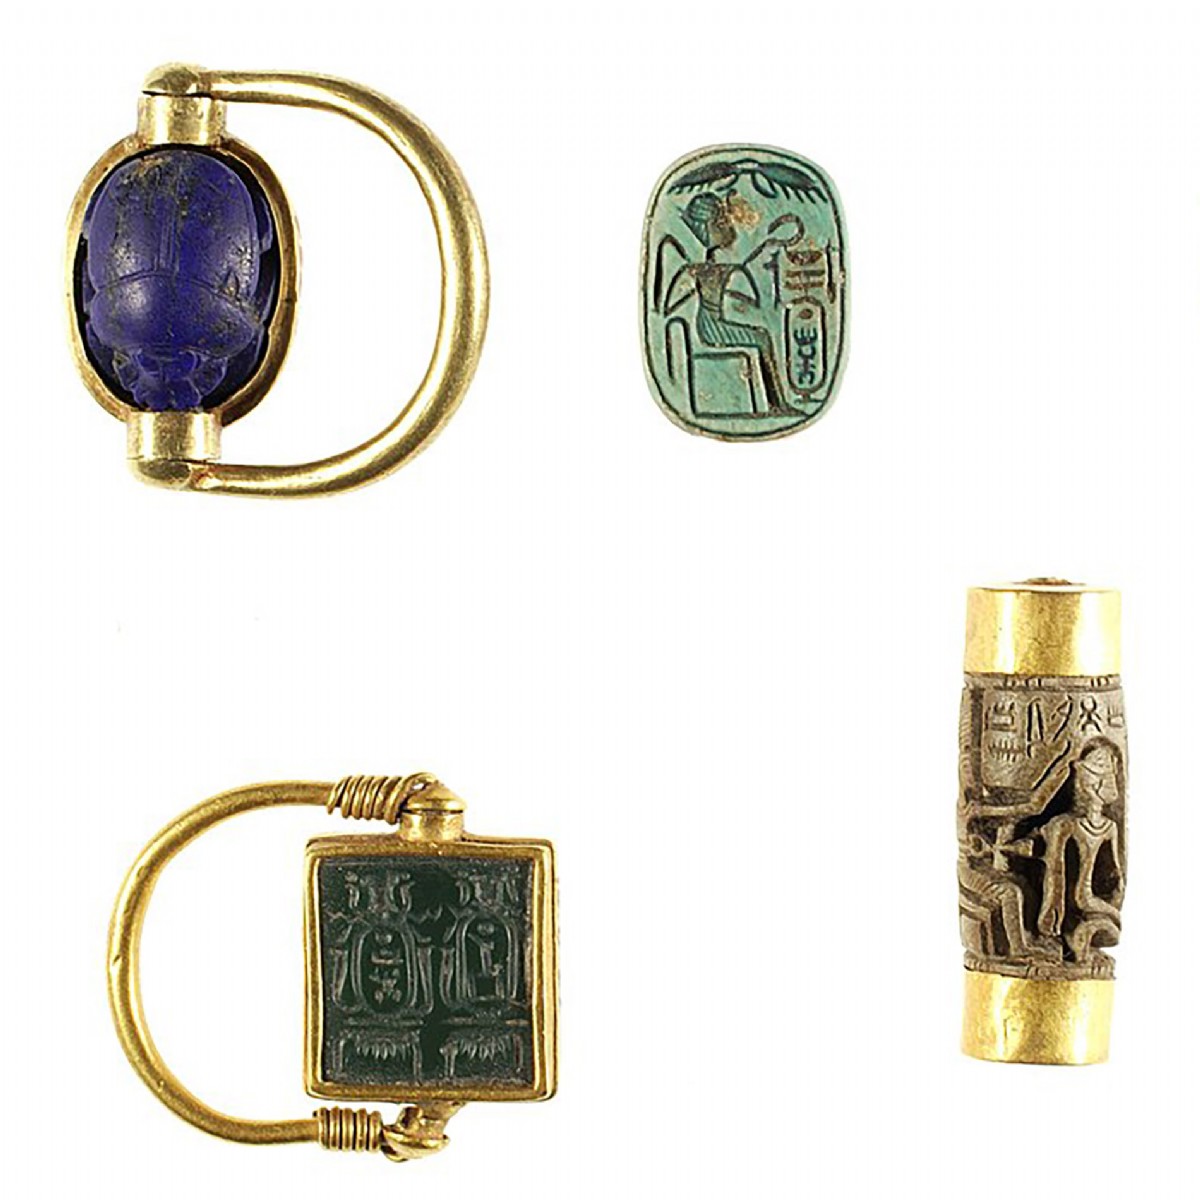 ancient egyptian bracelet